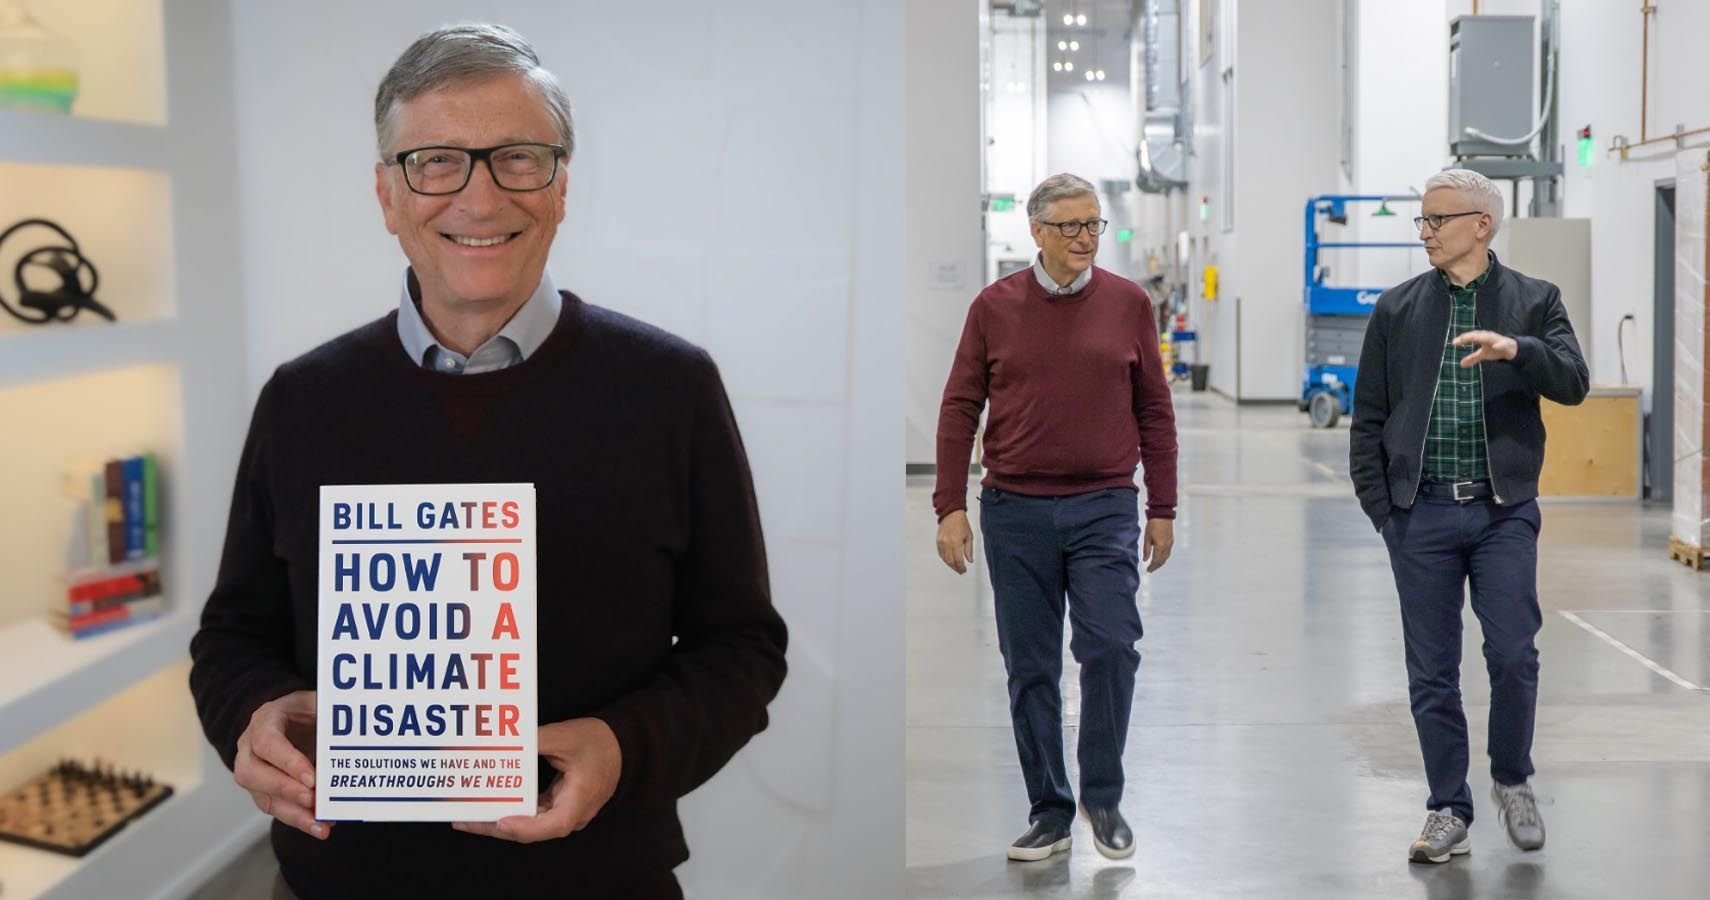 Bill Gates Details Solution For Climate Change